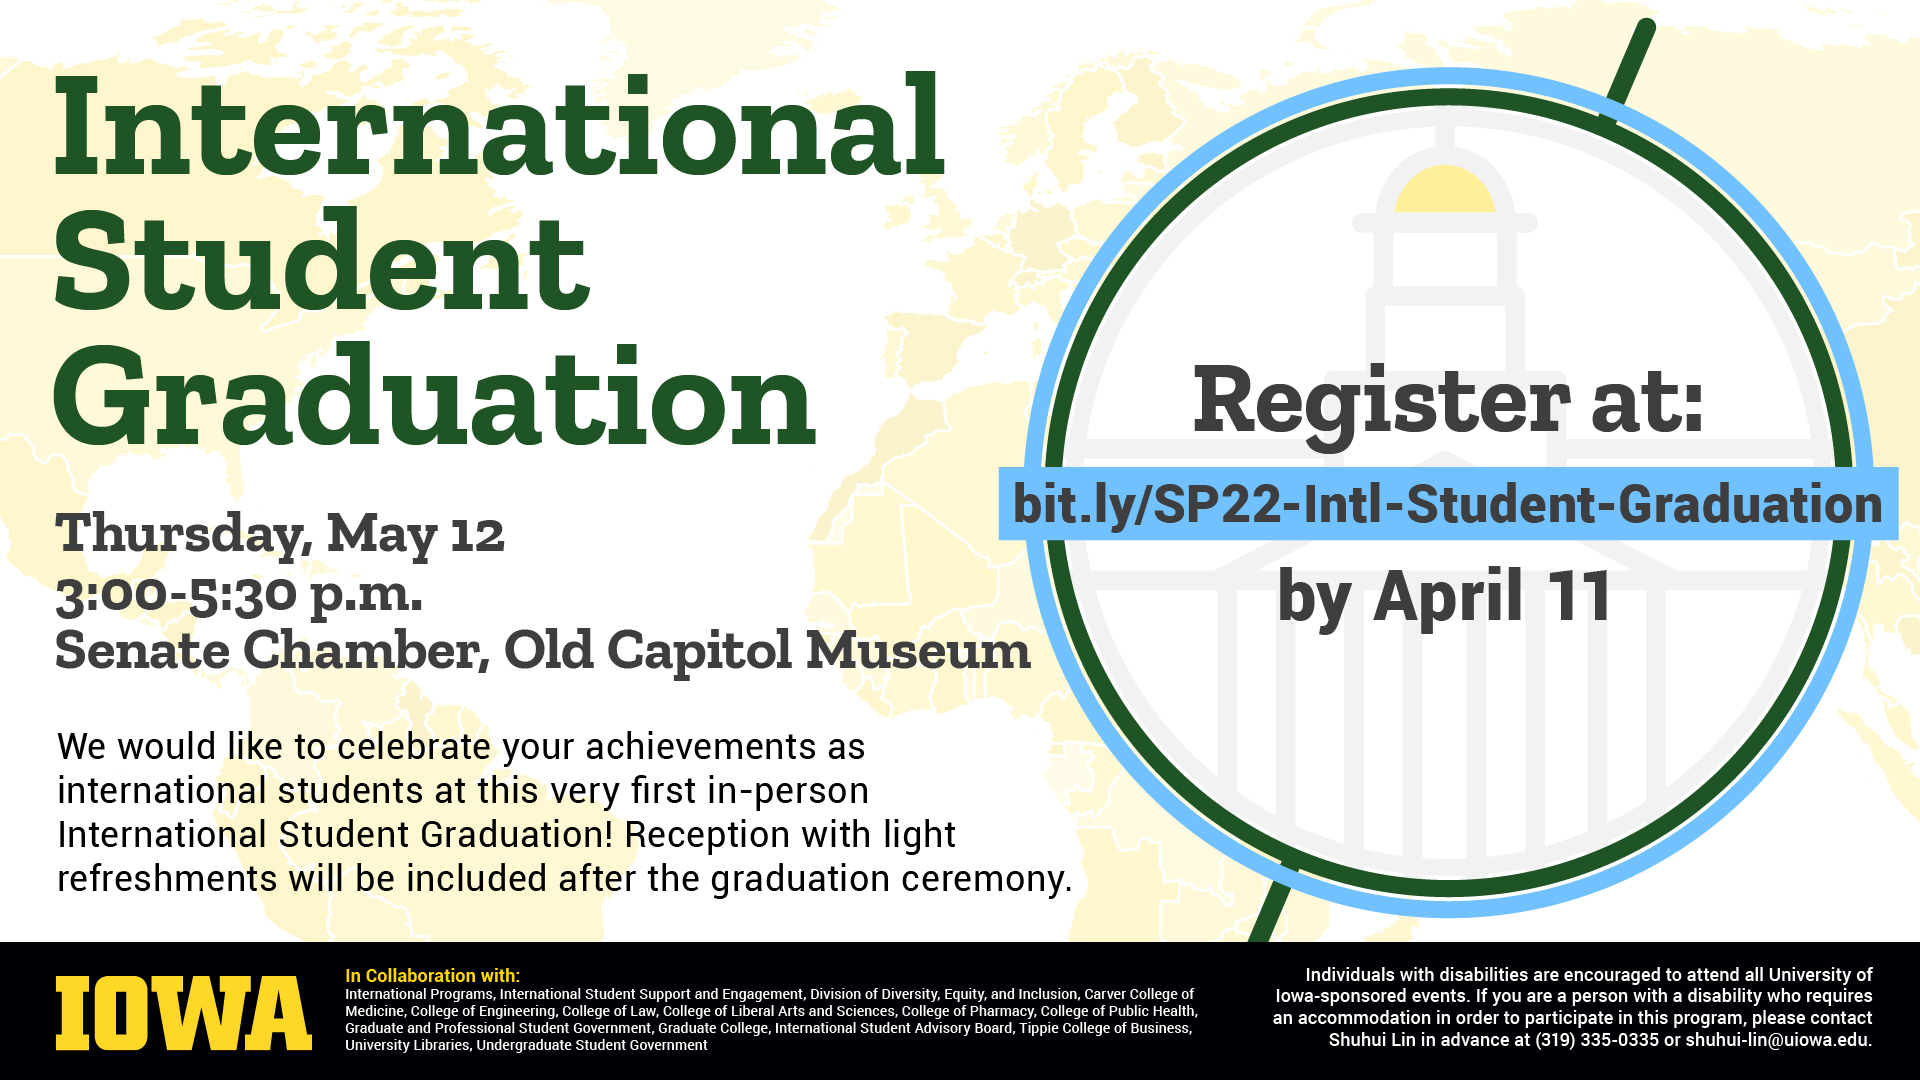 International Student Graduation Thursday, May 12. 3 - 5:30 p.m. Senate Chamber, Old Capitol Museum. Register at: bit.ly/SP22-Intl-Student-Graduation by April 11